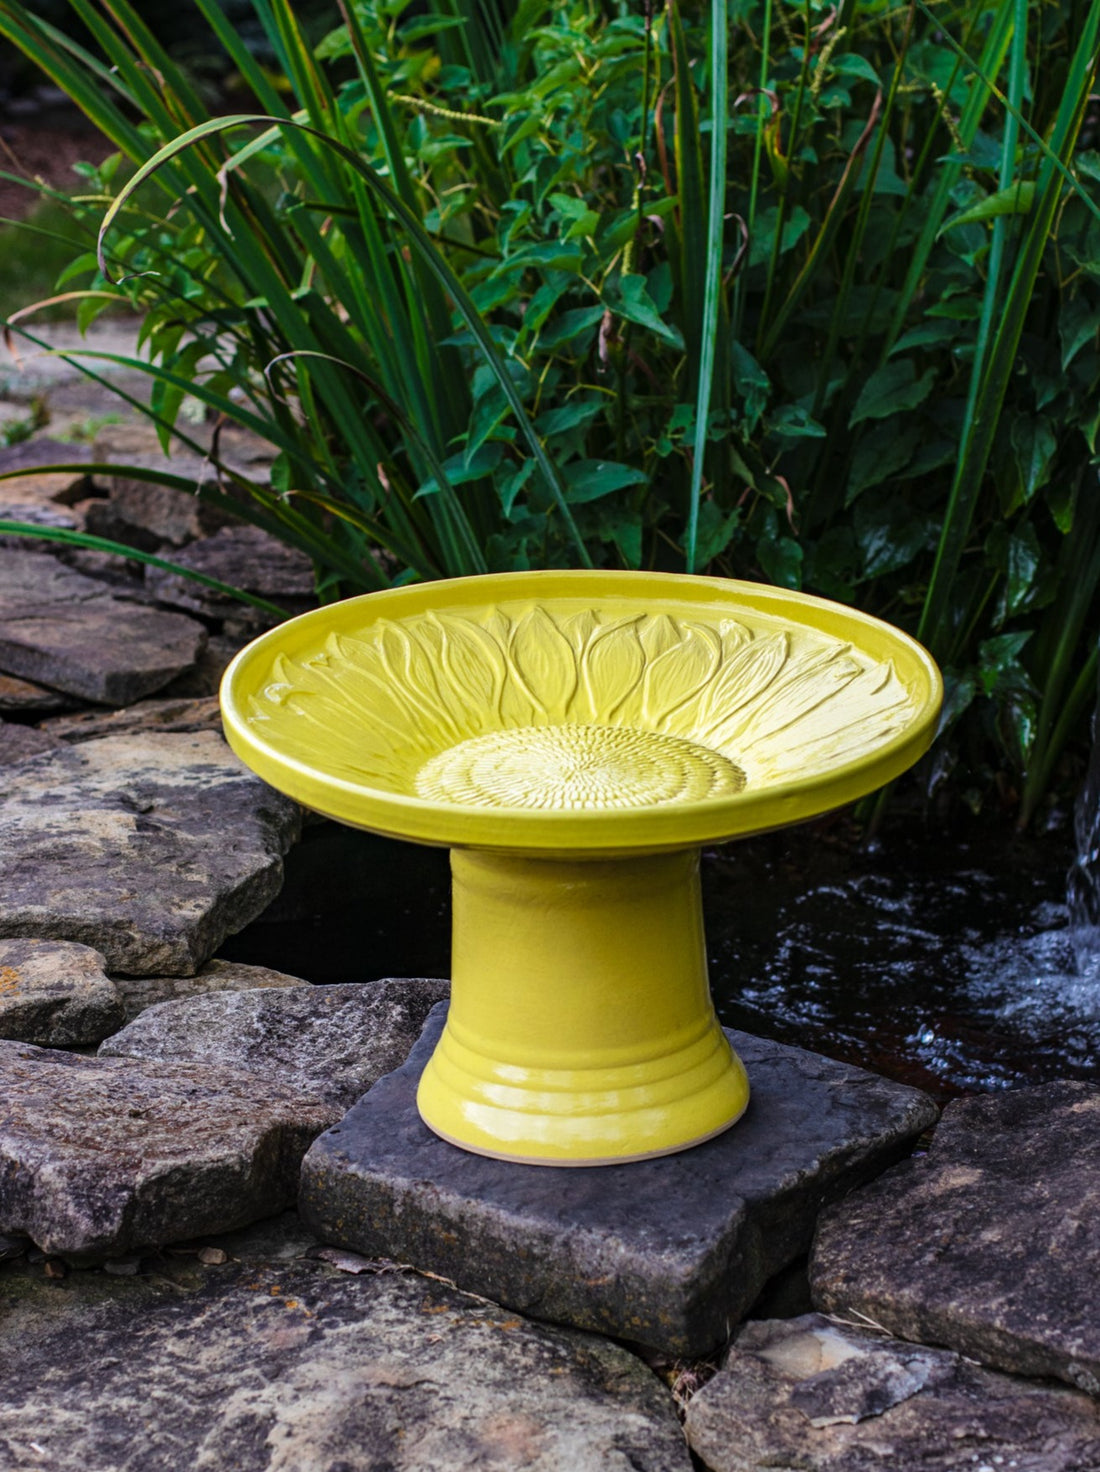 short sunflower design birdbath in yellow glaze in landscaped area